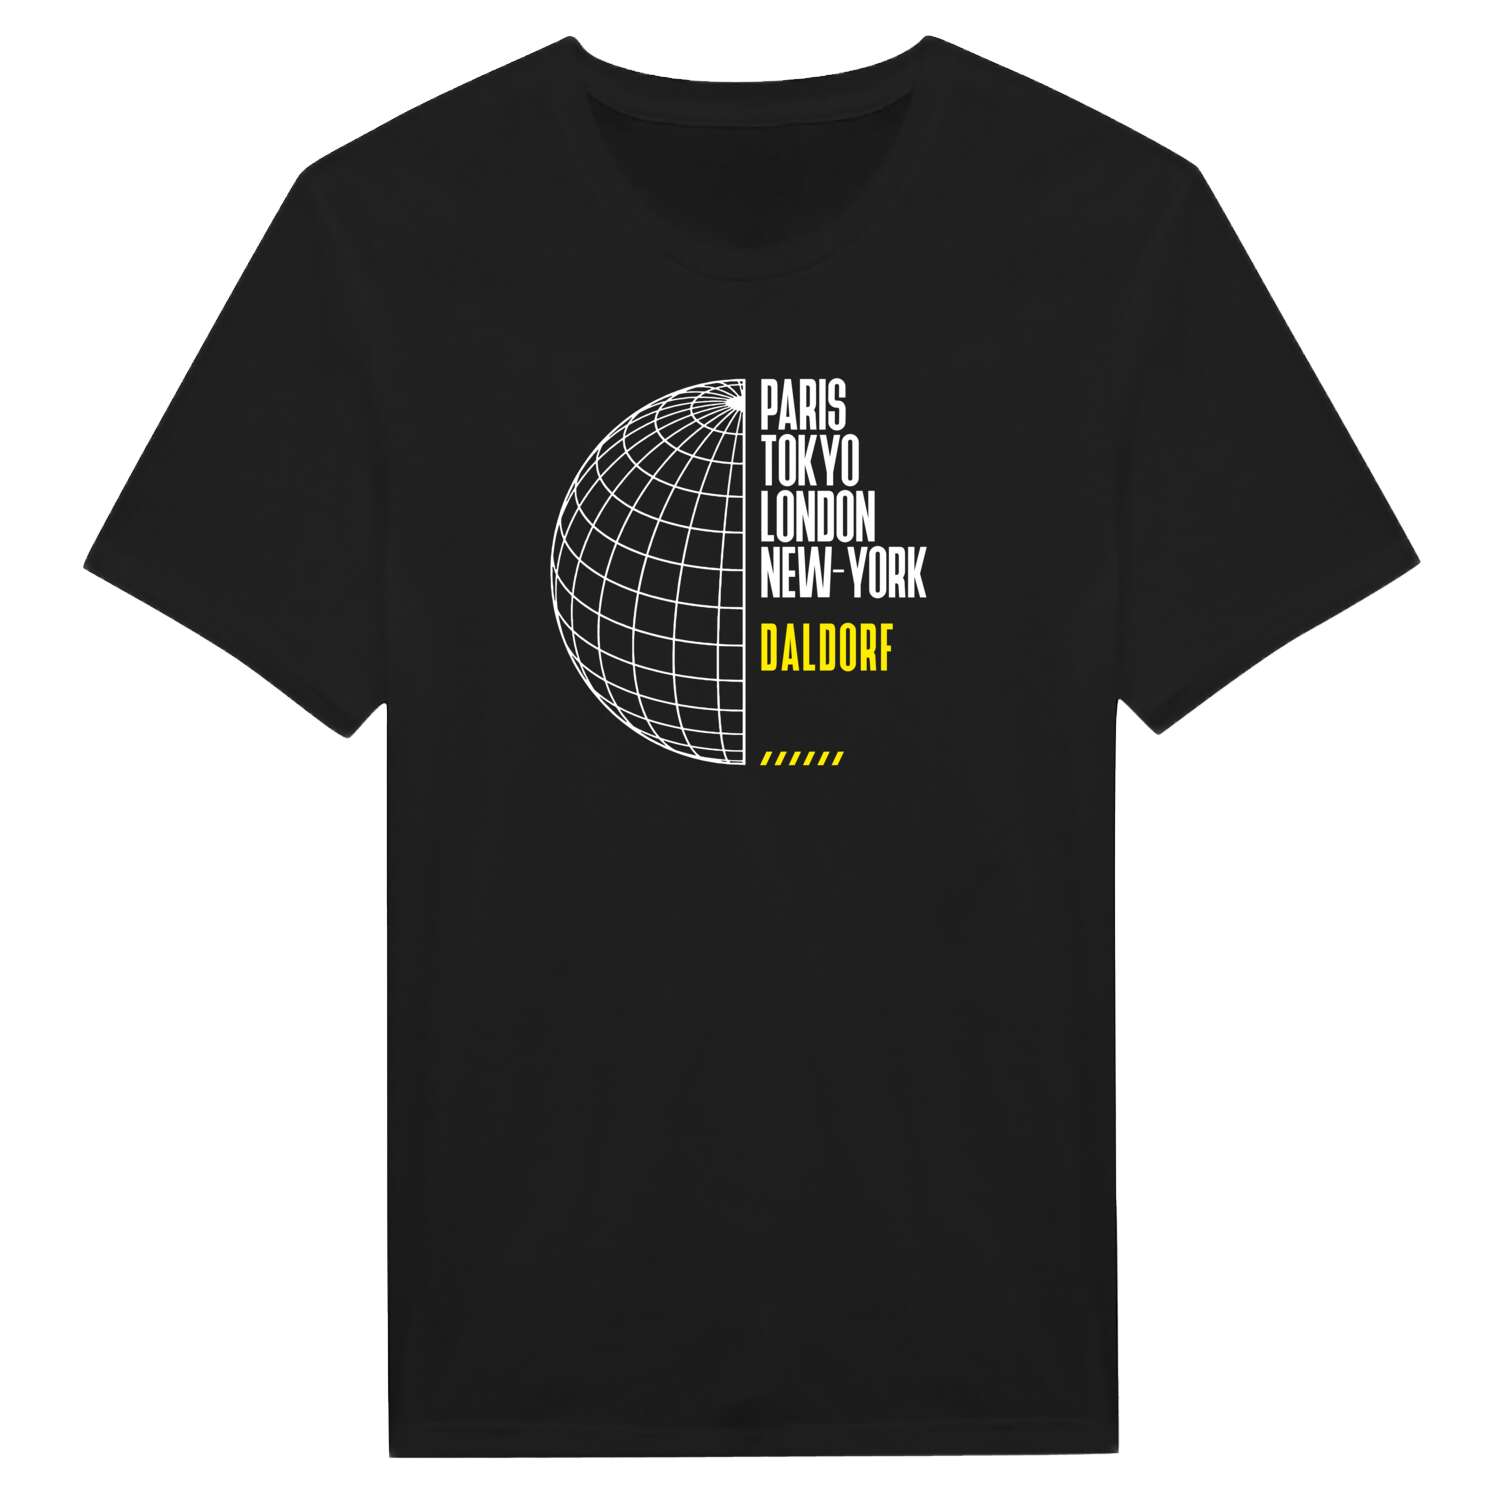 Daldorf T-Shirt »Paris Tokyo London«